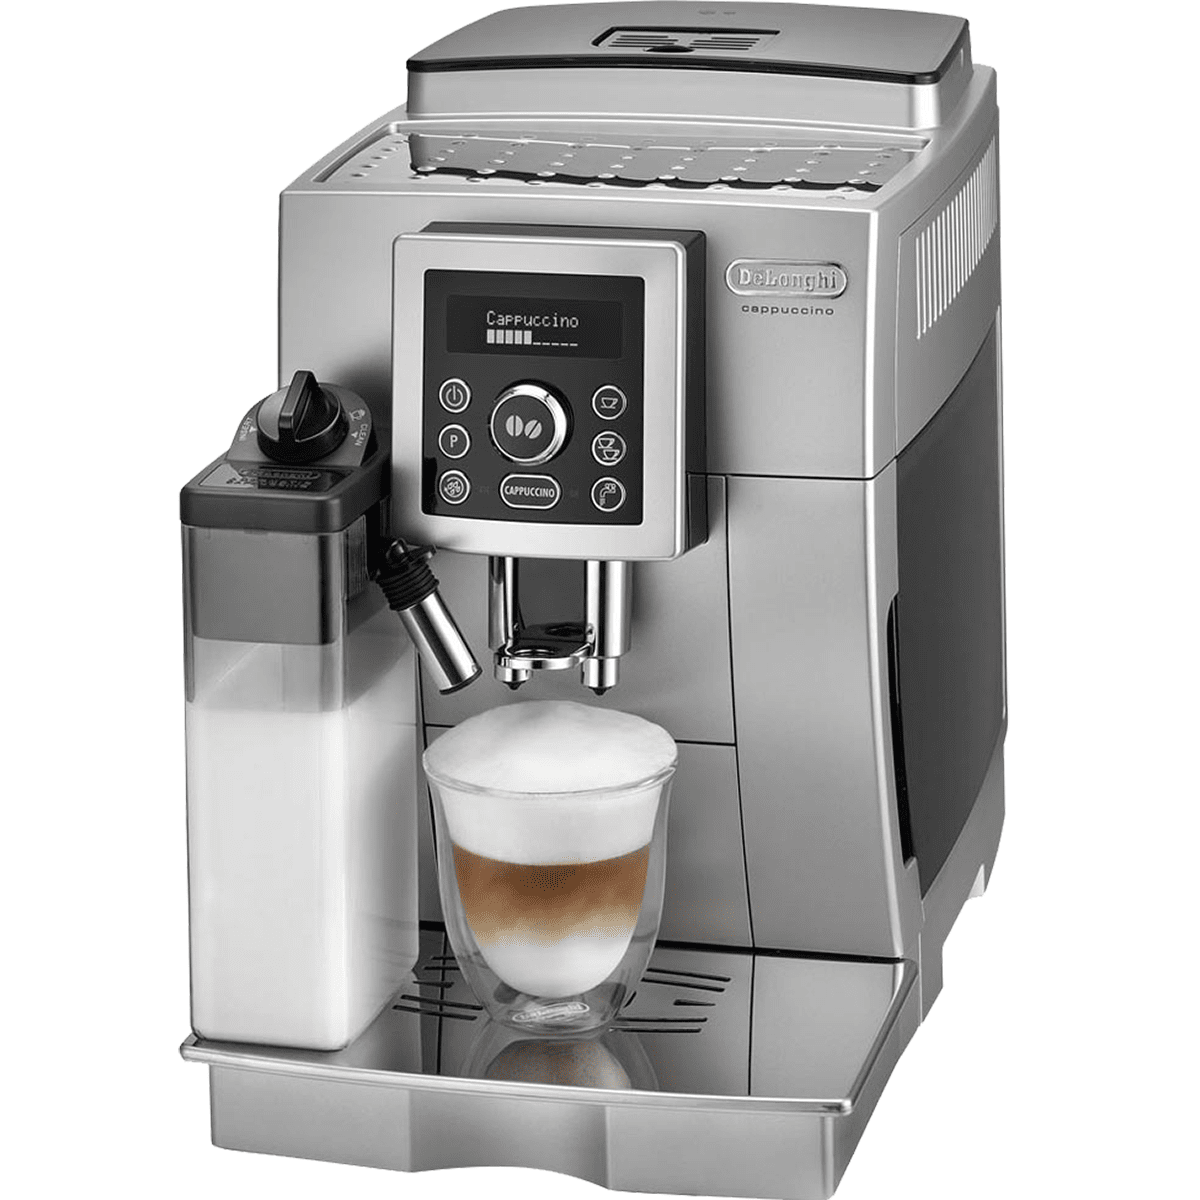 DeLonghi ECAM23460 Magnifica Digital Espresso Machine